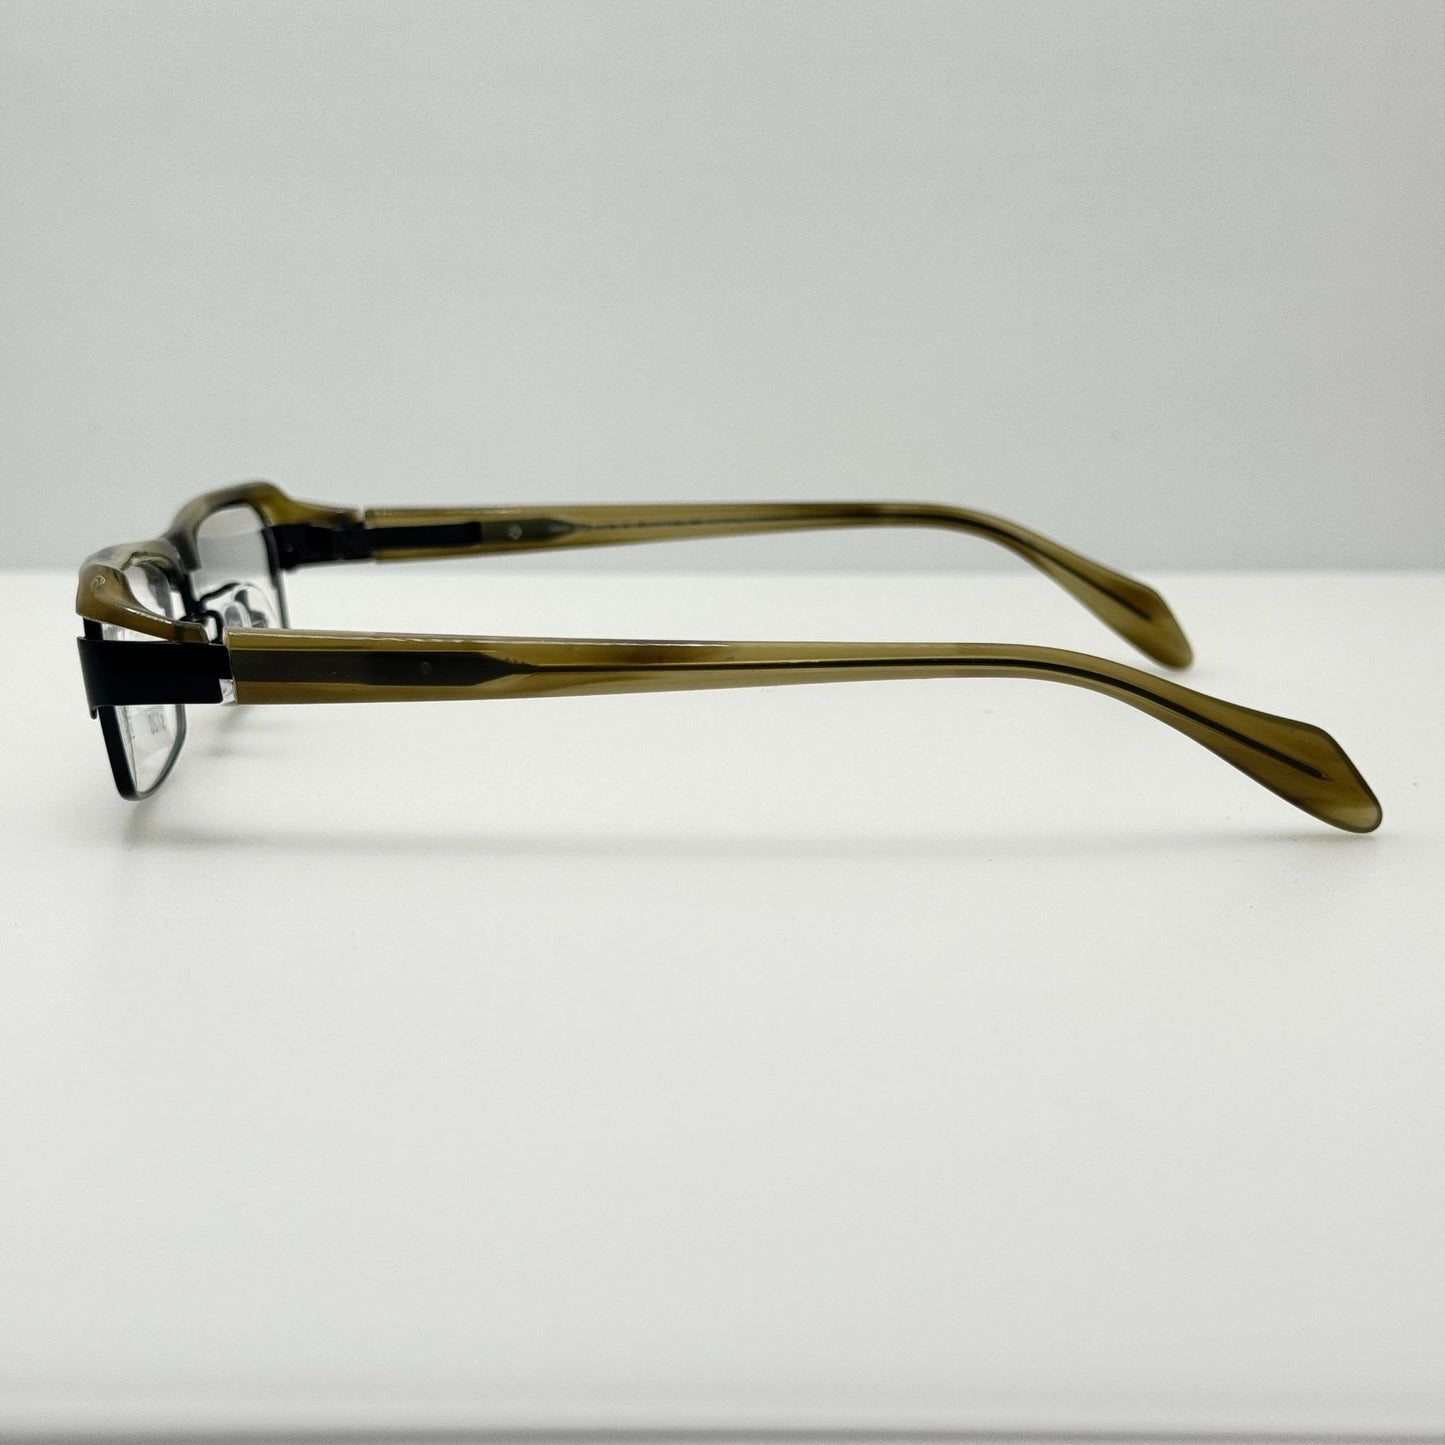 Jins Eyeglasses Eye Glasses Frames MMF-15A-422A 28 54-16-143 28